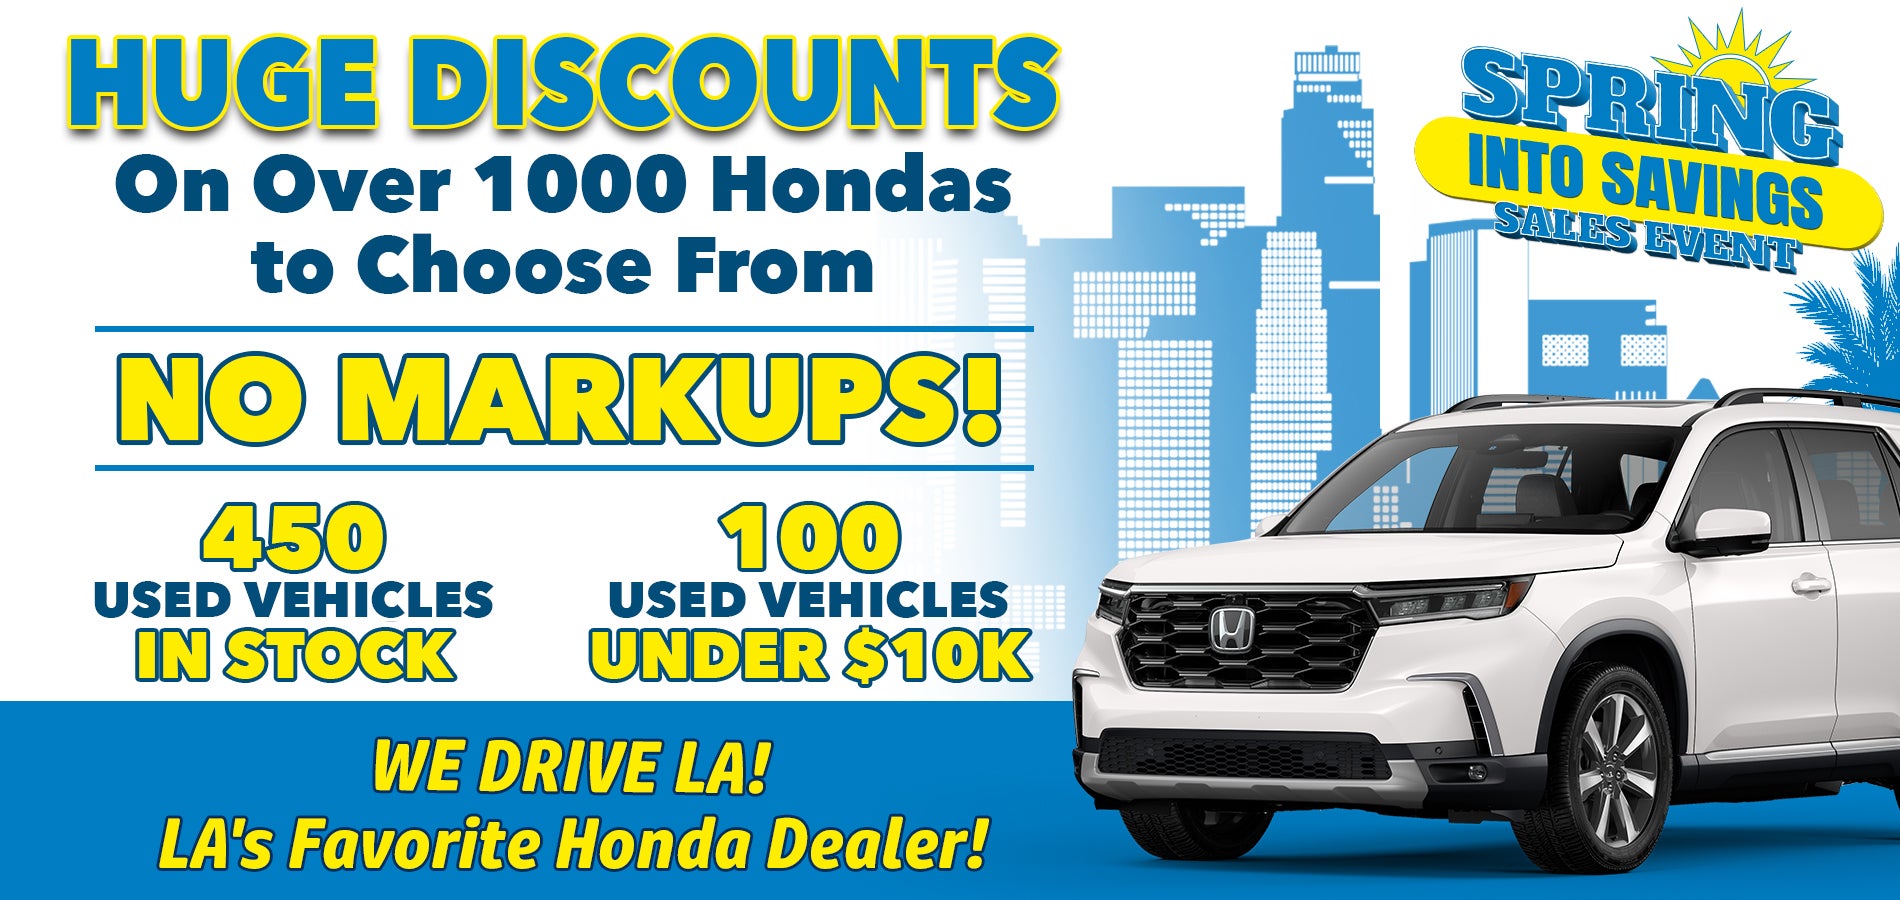 Huge Discounts on over 1000 new Honda's at Honda DTLA